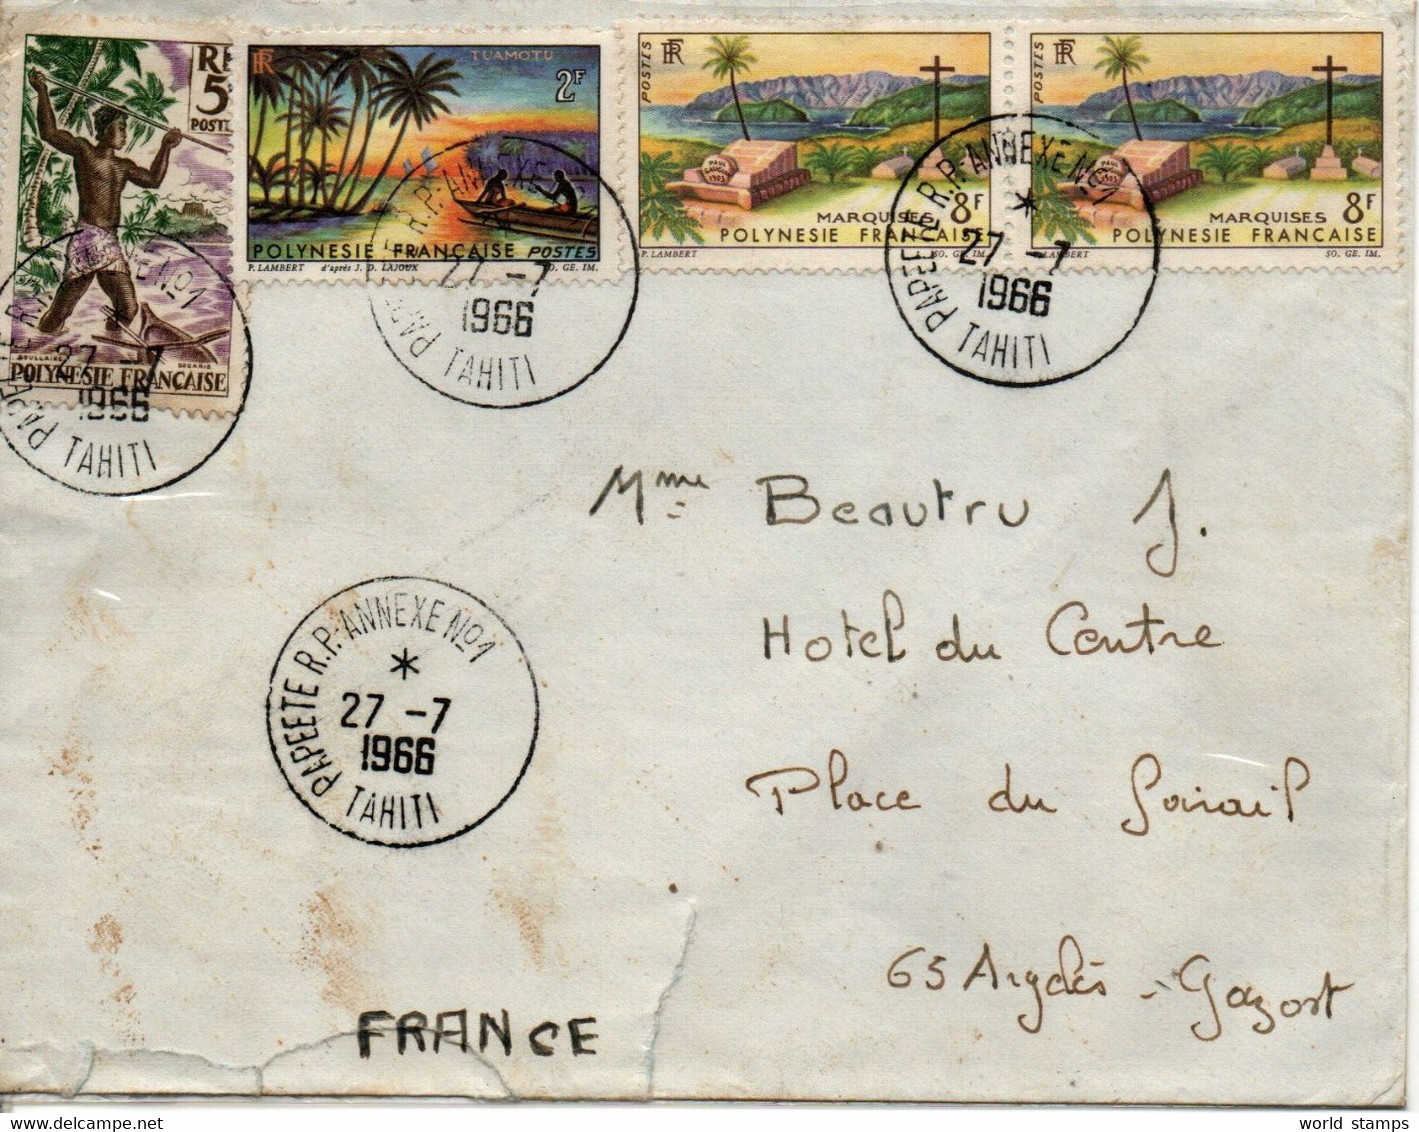 POLINESIE FR. 1966 - Lettres & Documents